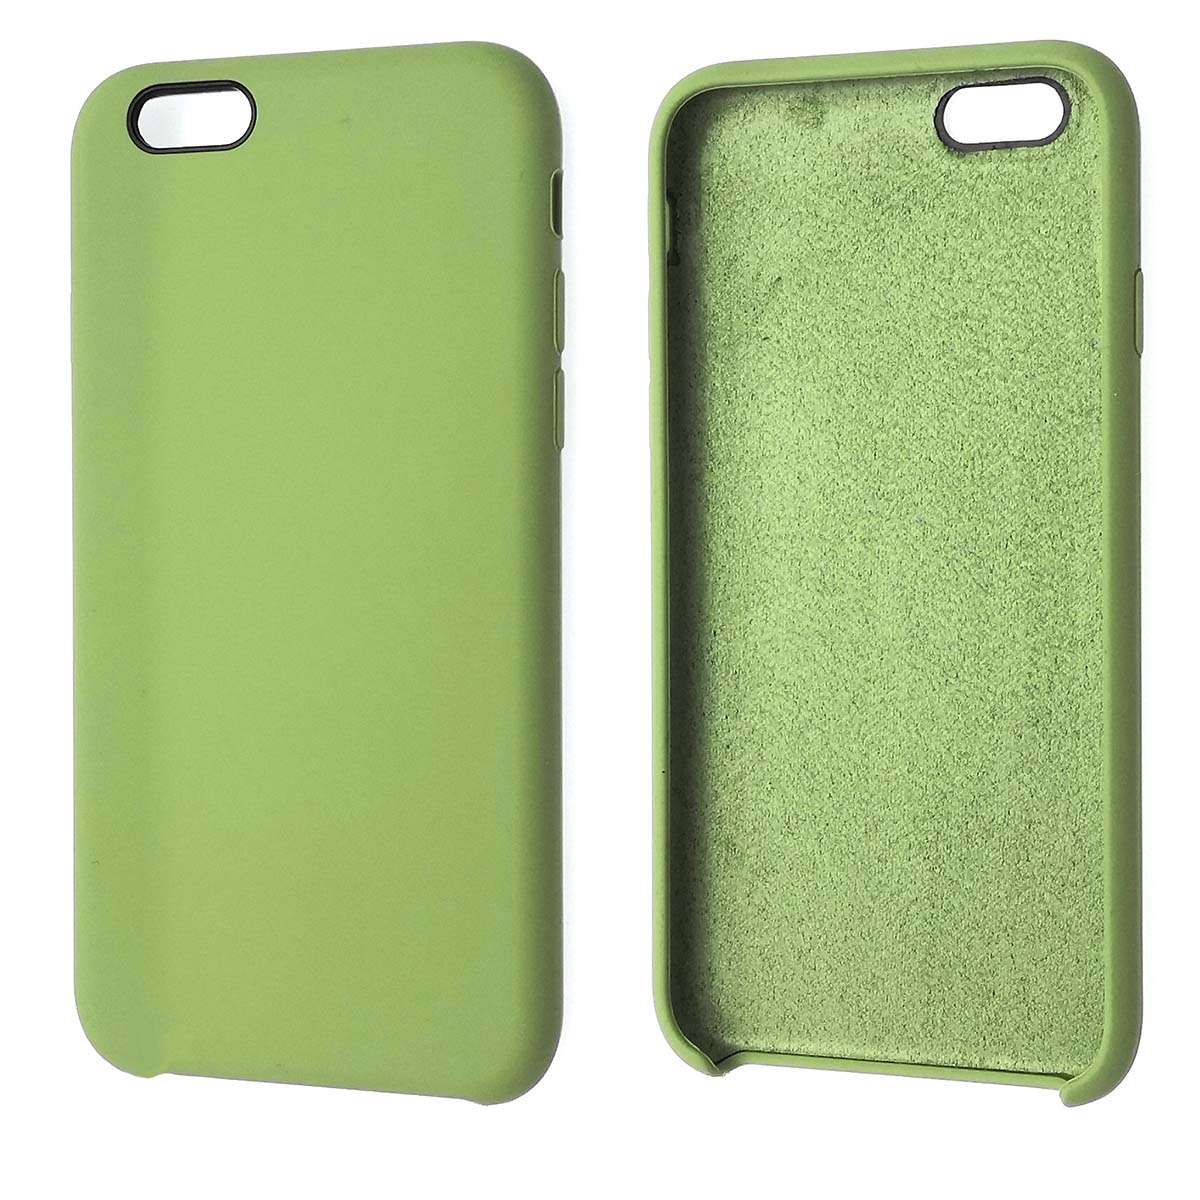 Чехол накладка Silicon Case для APPLE iPhone 6, 6G, 6S, силикон, бархат, цвет фисташковый.